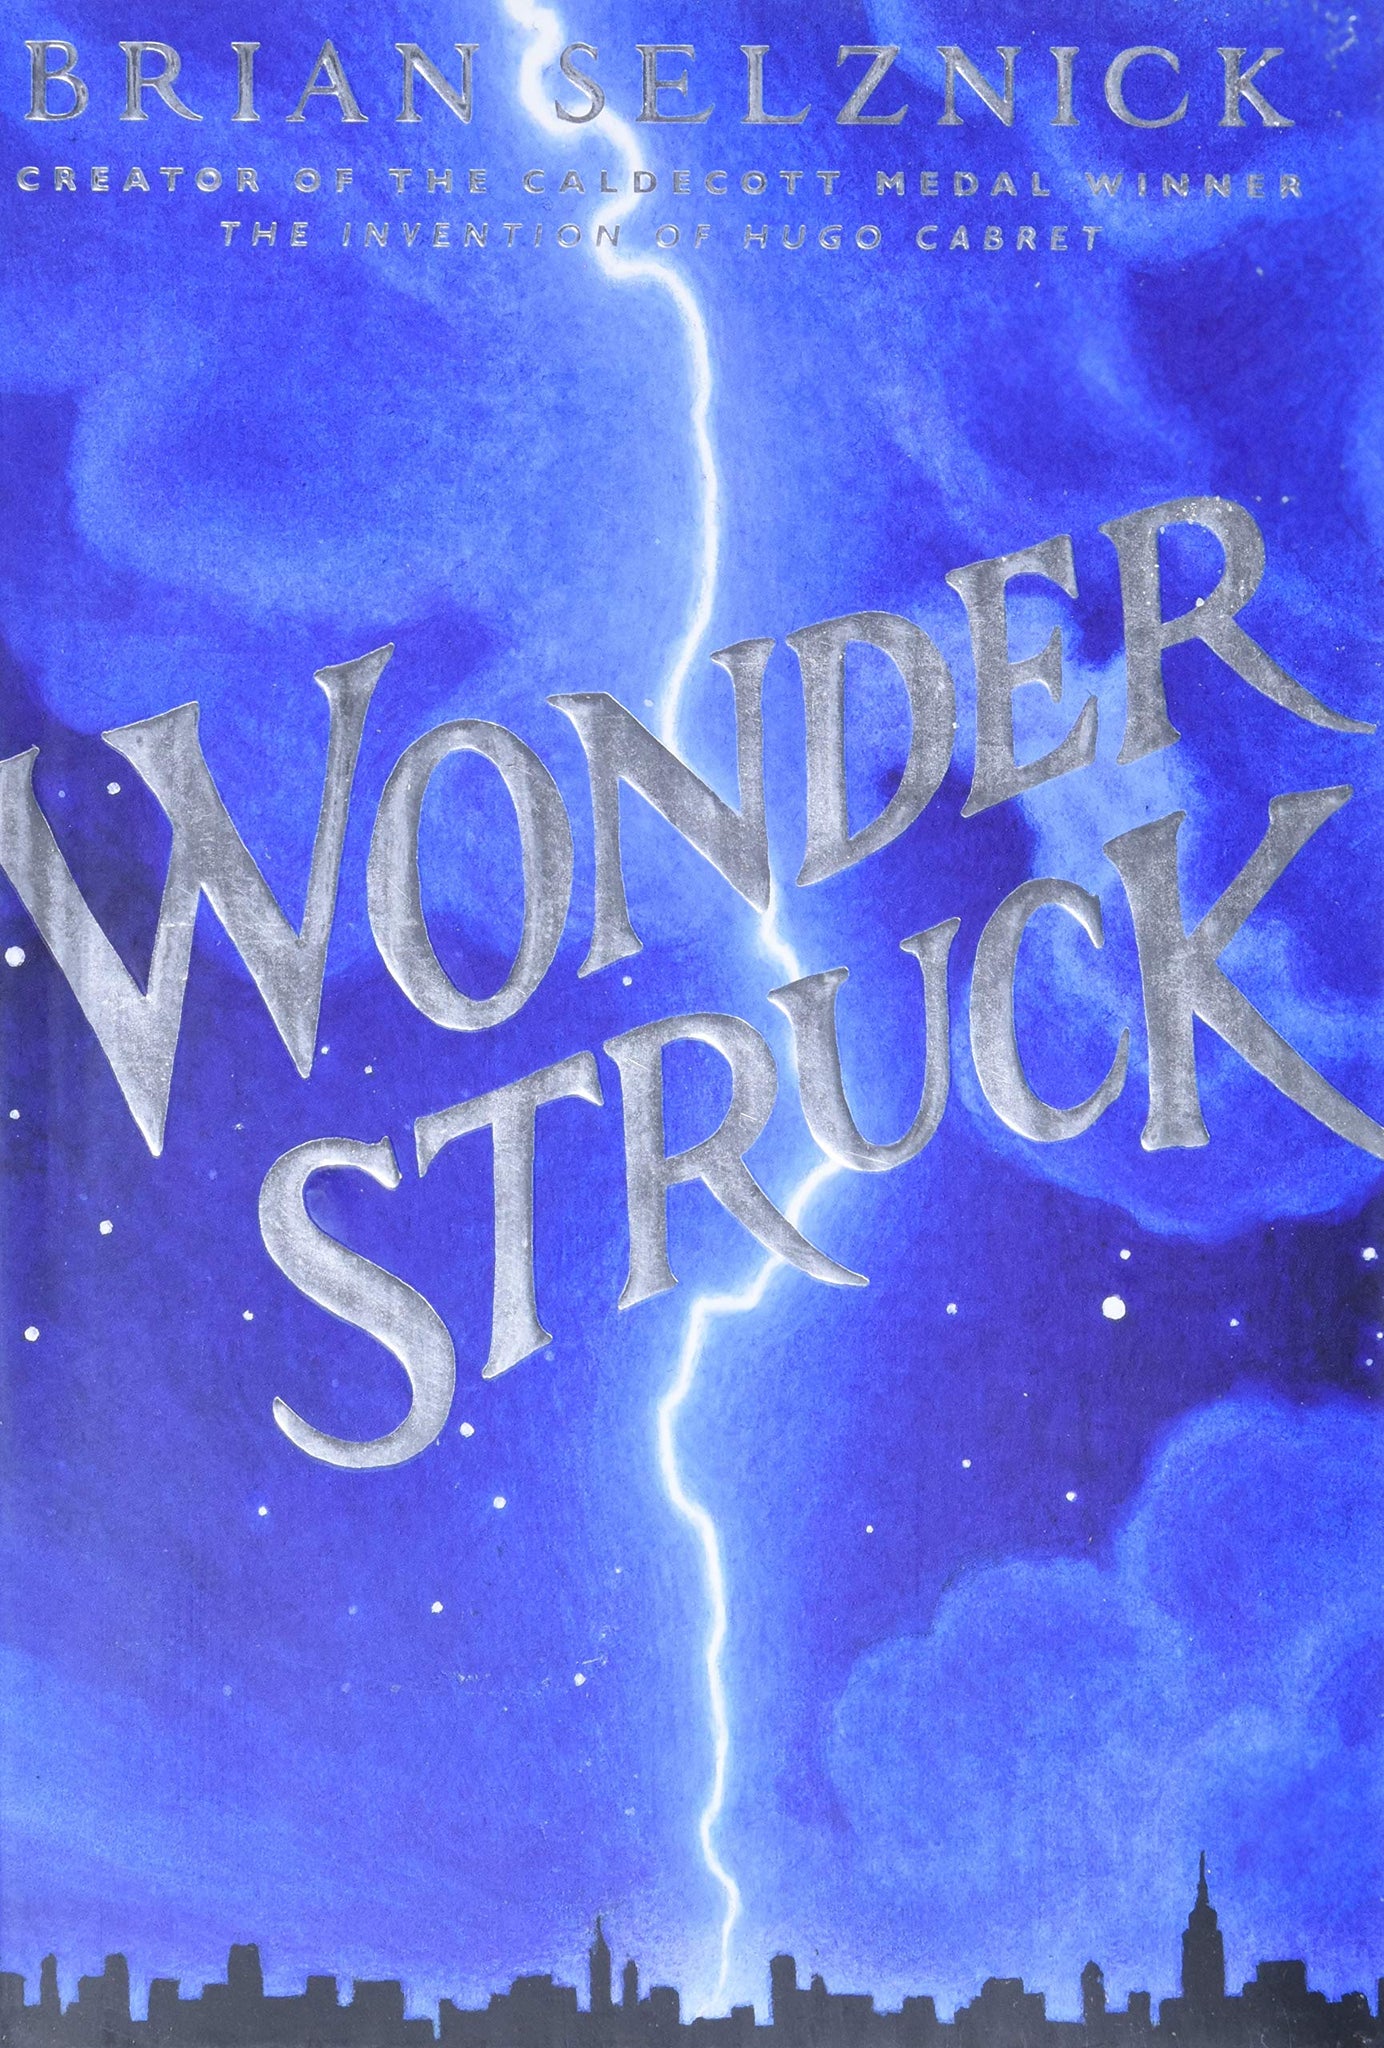 Wonderstruck (Schneider Family Book Award - Middle School Winner) - Hardback